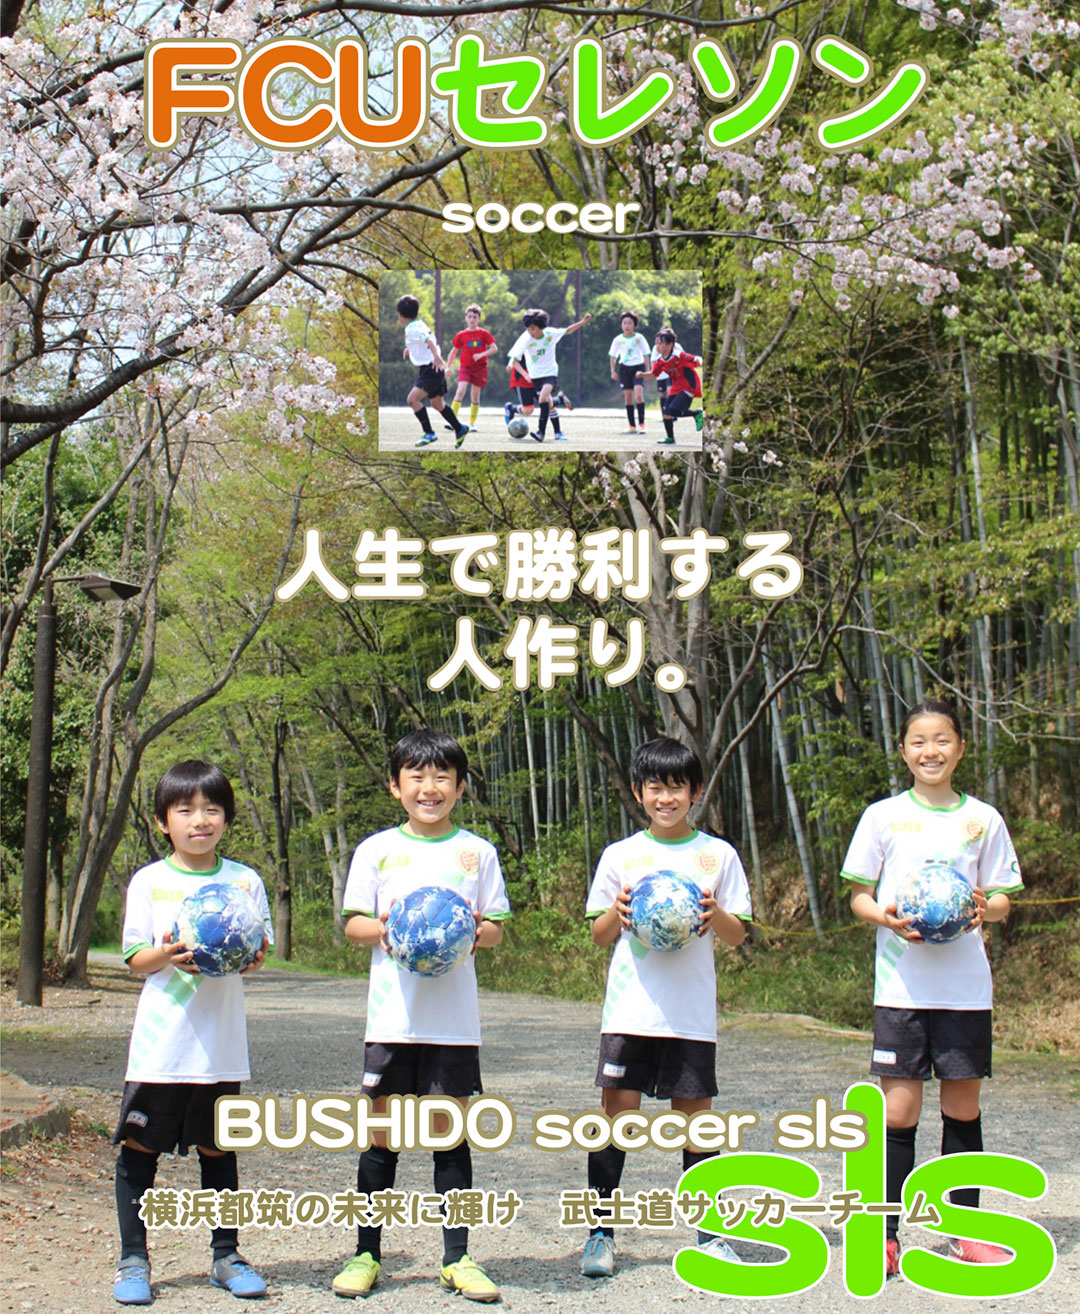 FCUセレソン soccer|人生で勝利する人作り。|BUSHIDO soccer sls|横浜都筑の未来に輝け　武士道サッカーチーム